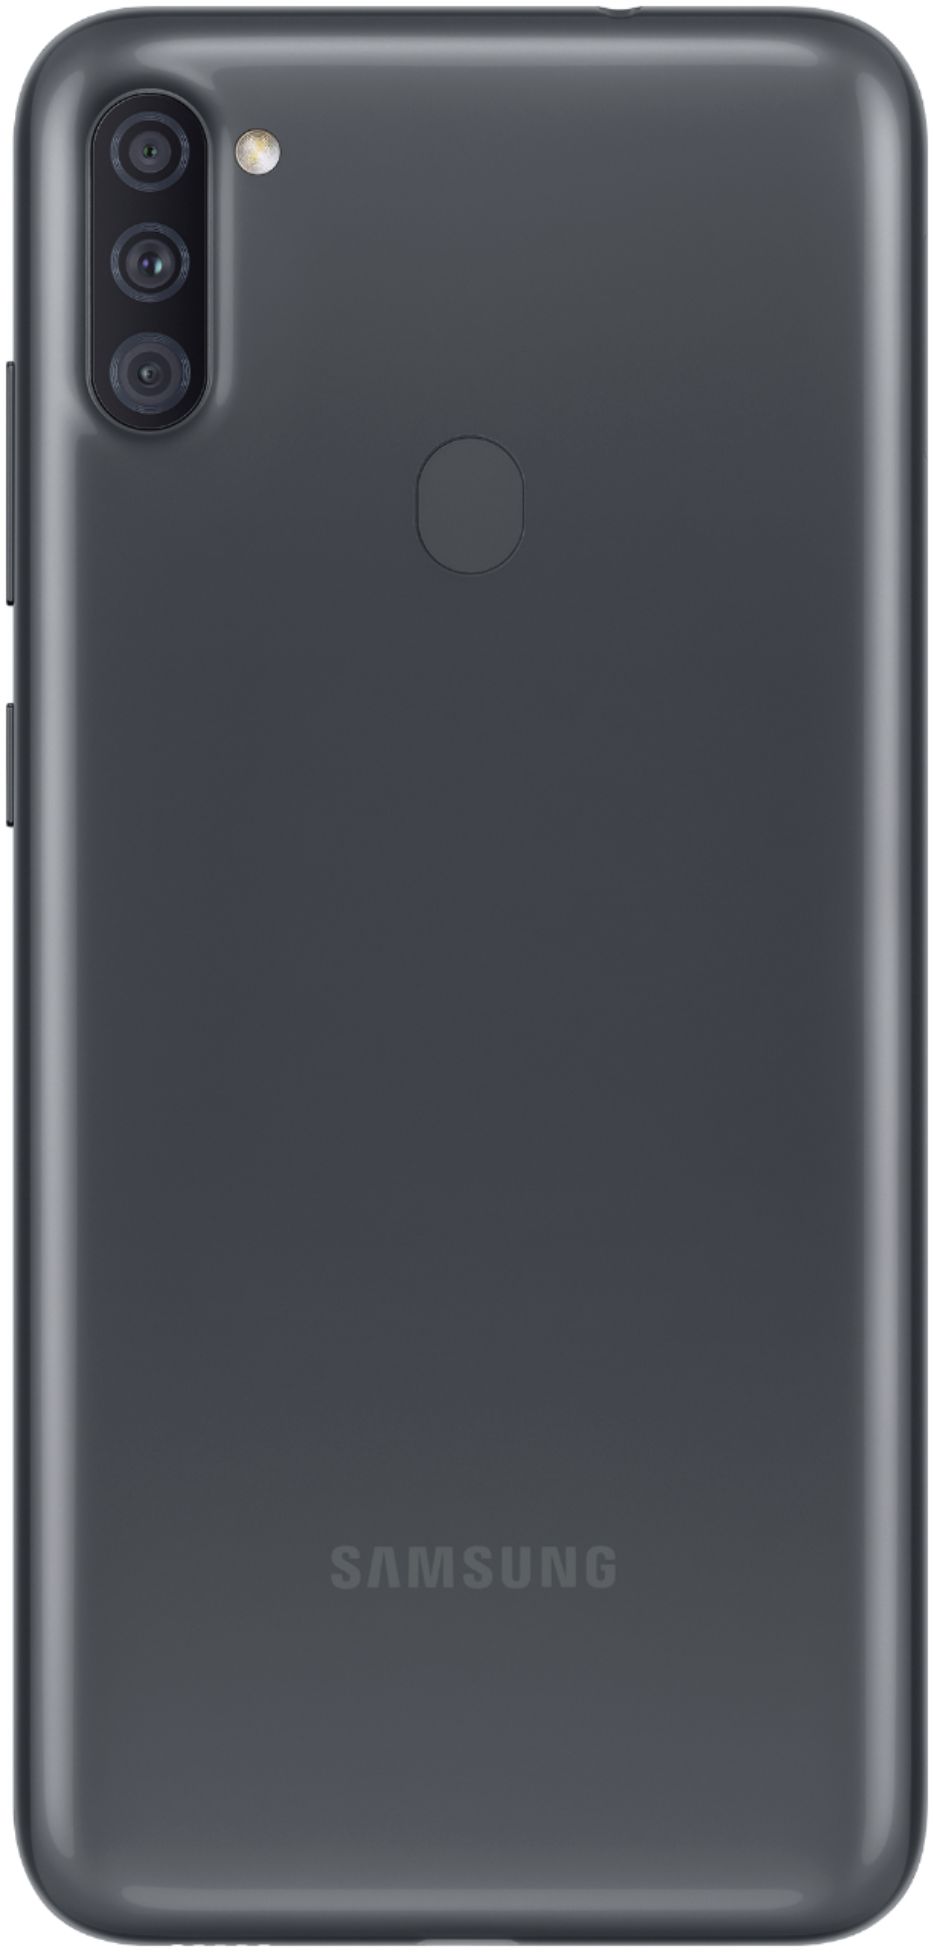 Back View: Samsung Galaxy A11 - 4G smartphone - RAM 2 GB / Internal Memory 32 GB - microSD slot - LCD display - 6.4" - 1560 x 720 pixels 13 MP, 5 MP, 2 MP - front camera 8 MP - prepaid - Total Wireless